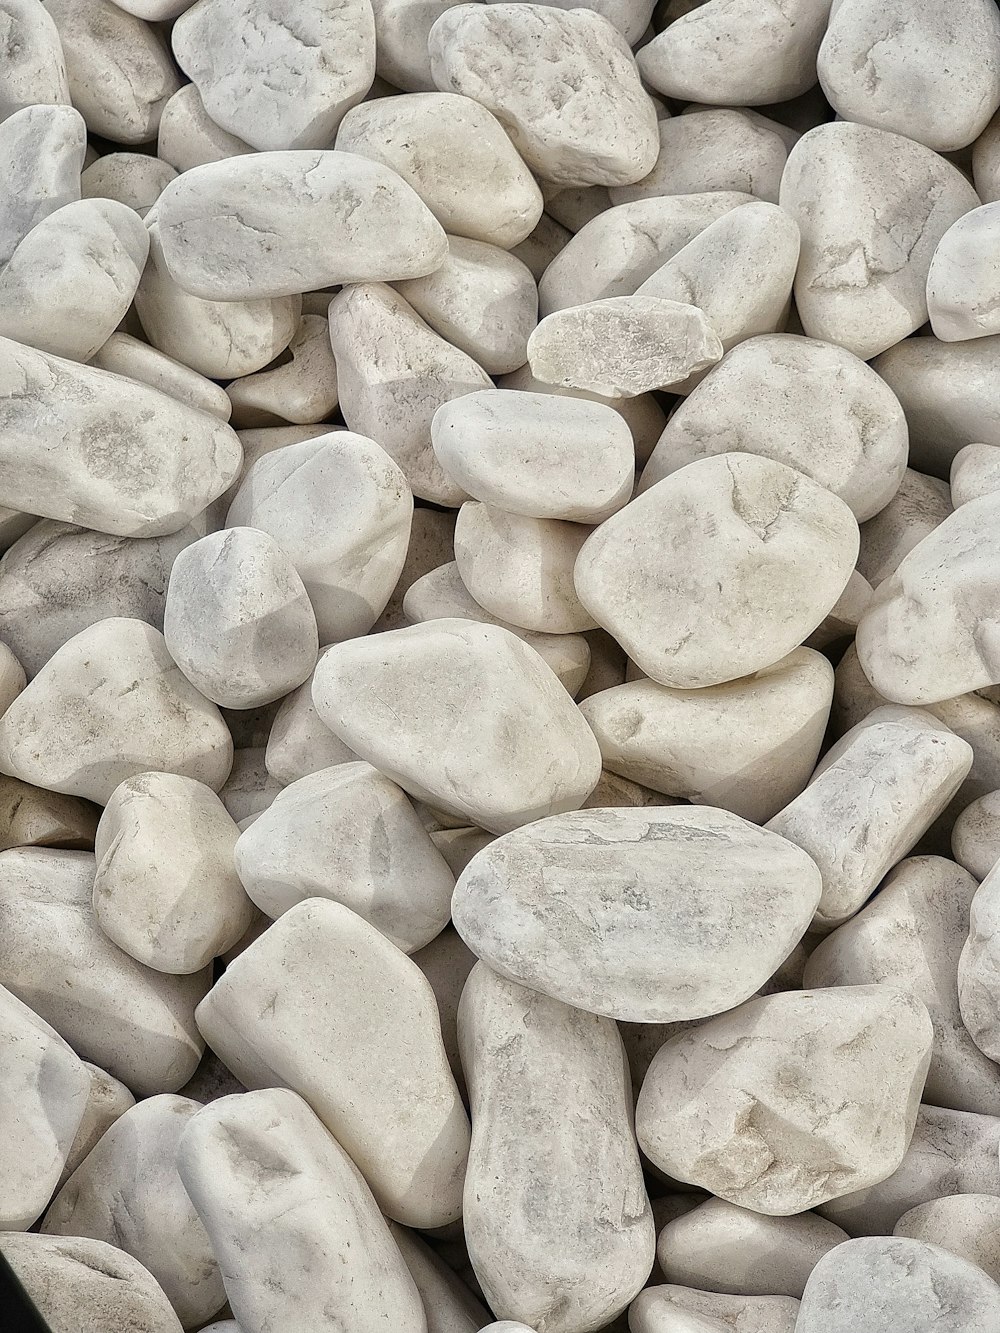 a pile of white rocks